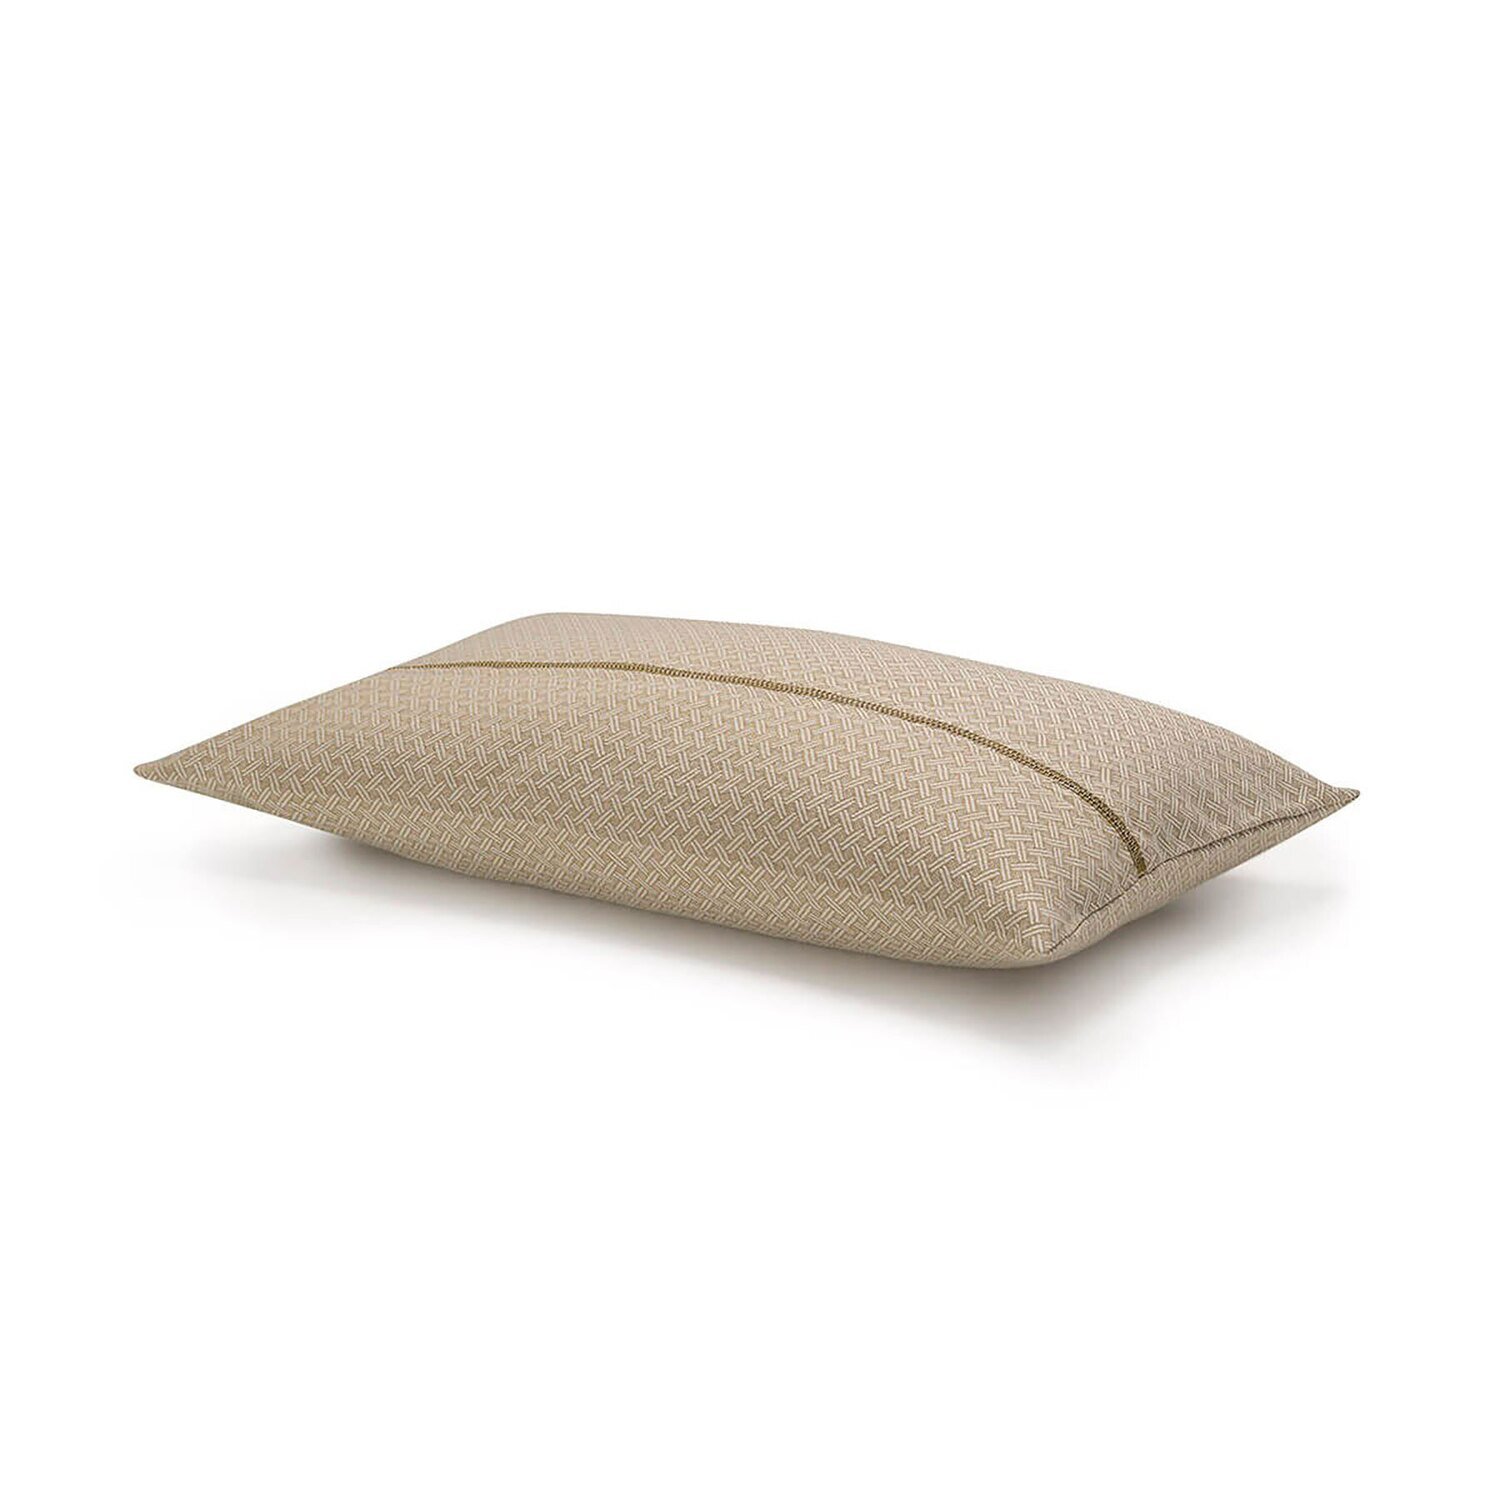 Le Jacquard Francais Cushion Cover Osmose Tressage Cork 100% Coton 26708